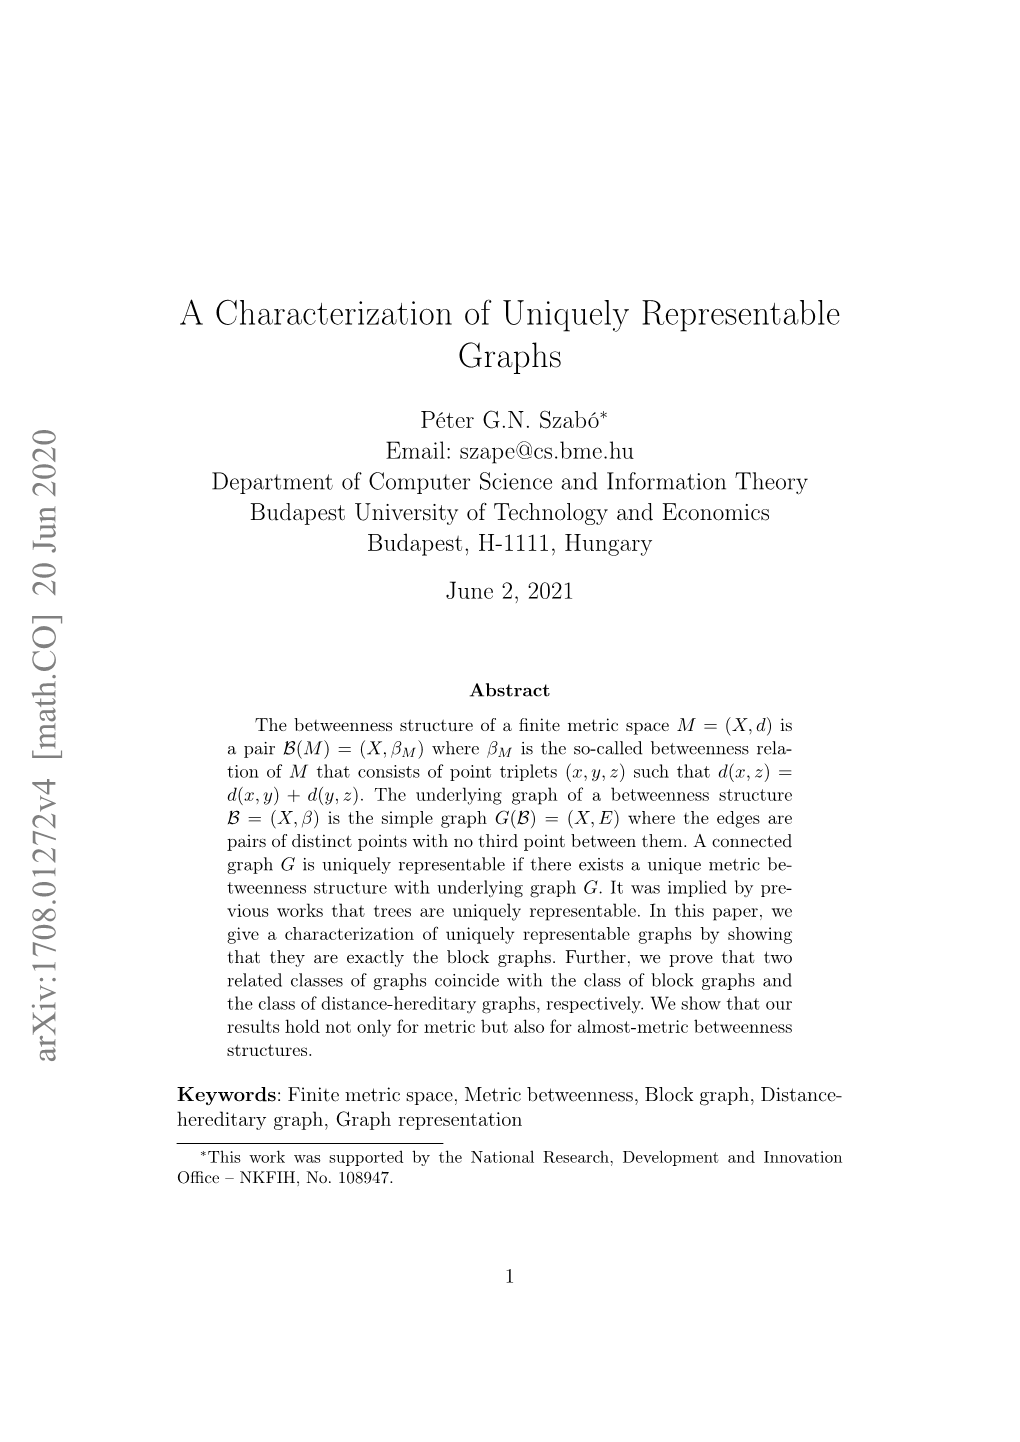 A Characterization of Uniquely Representable Graphs Arxiv